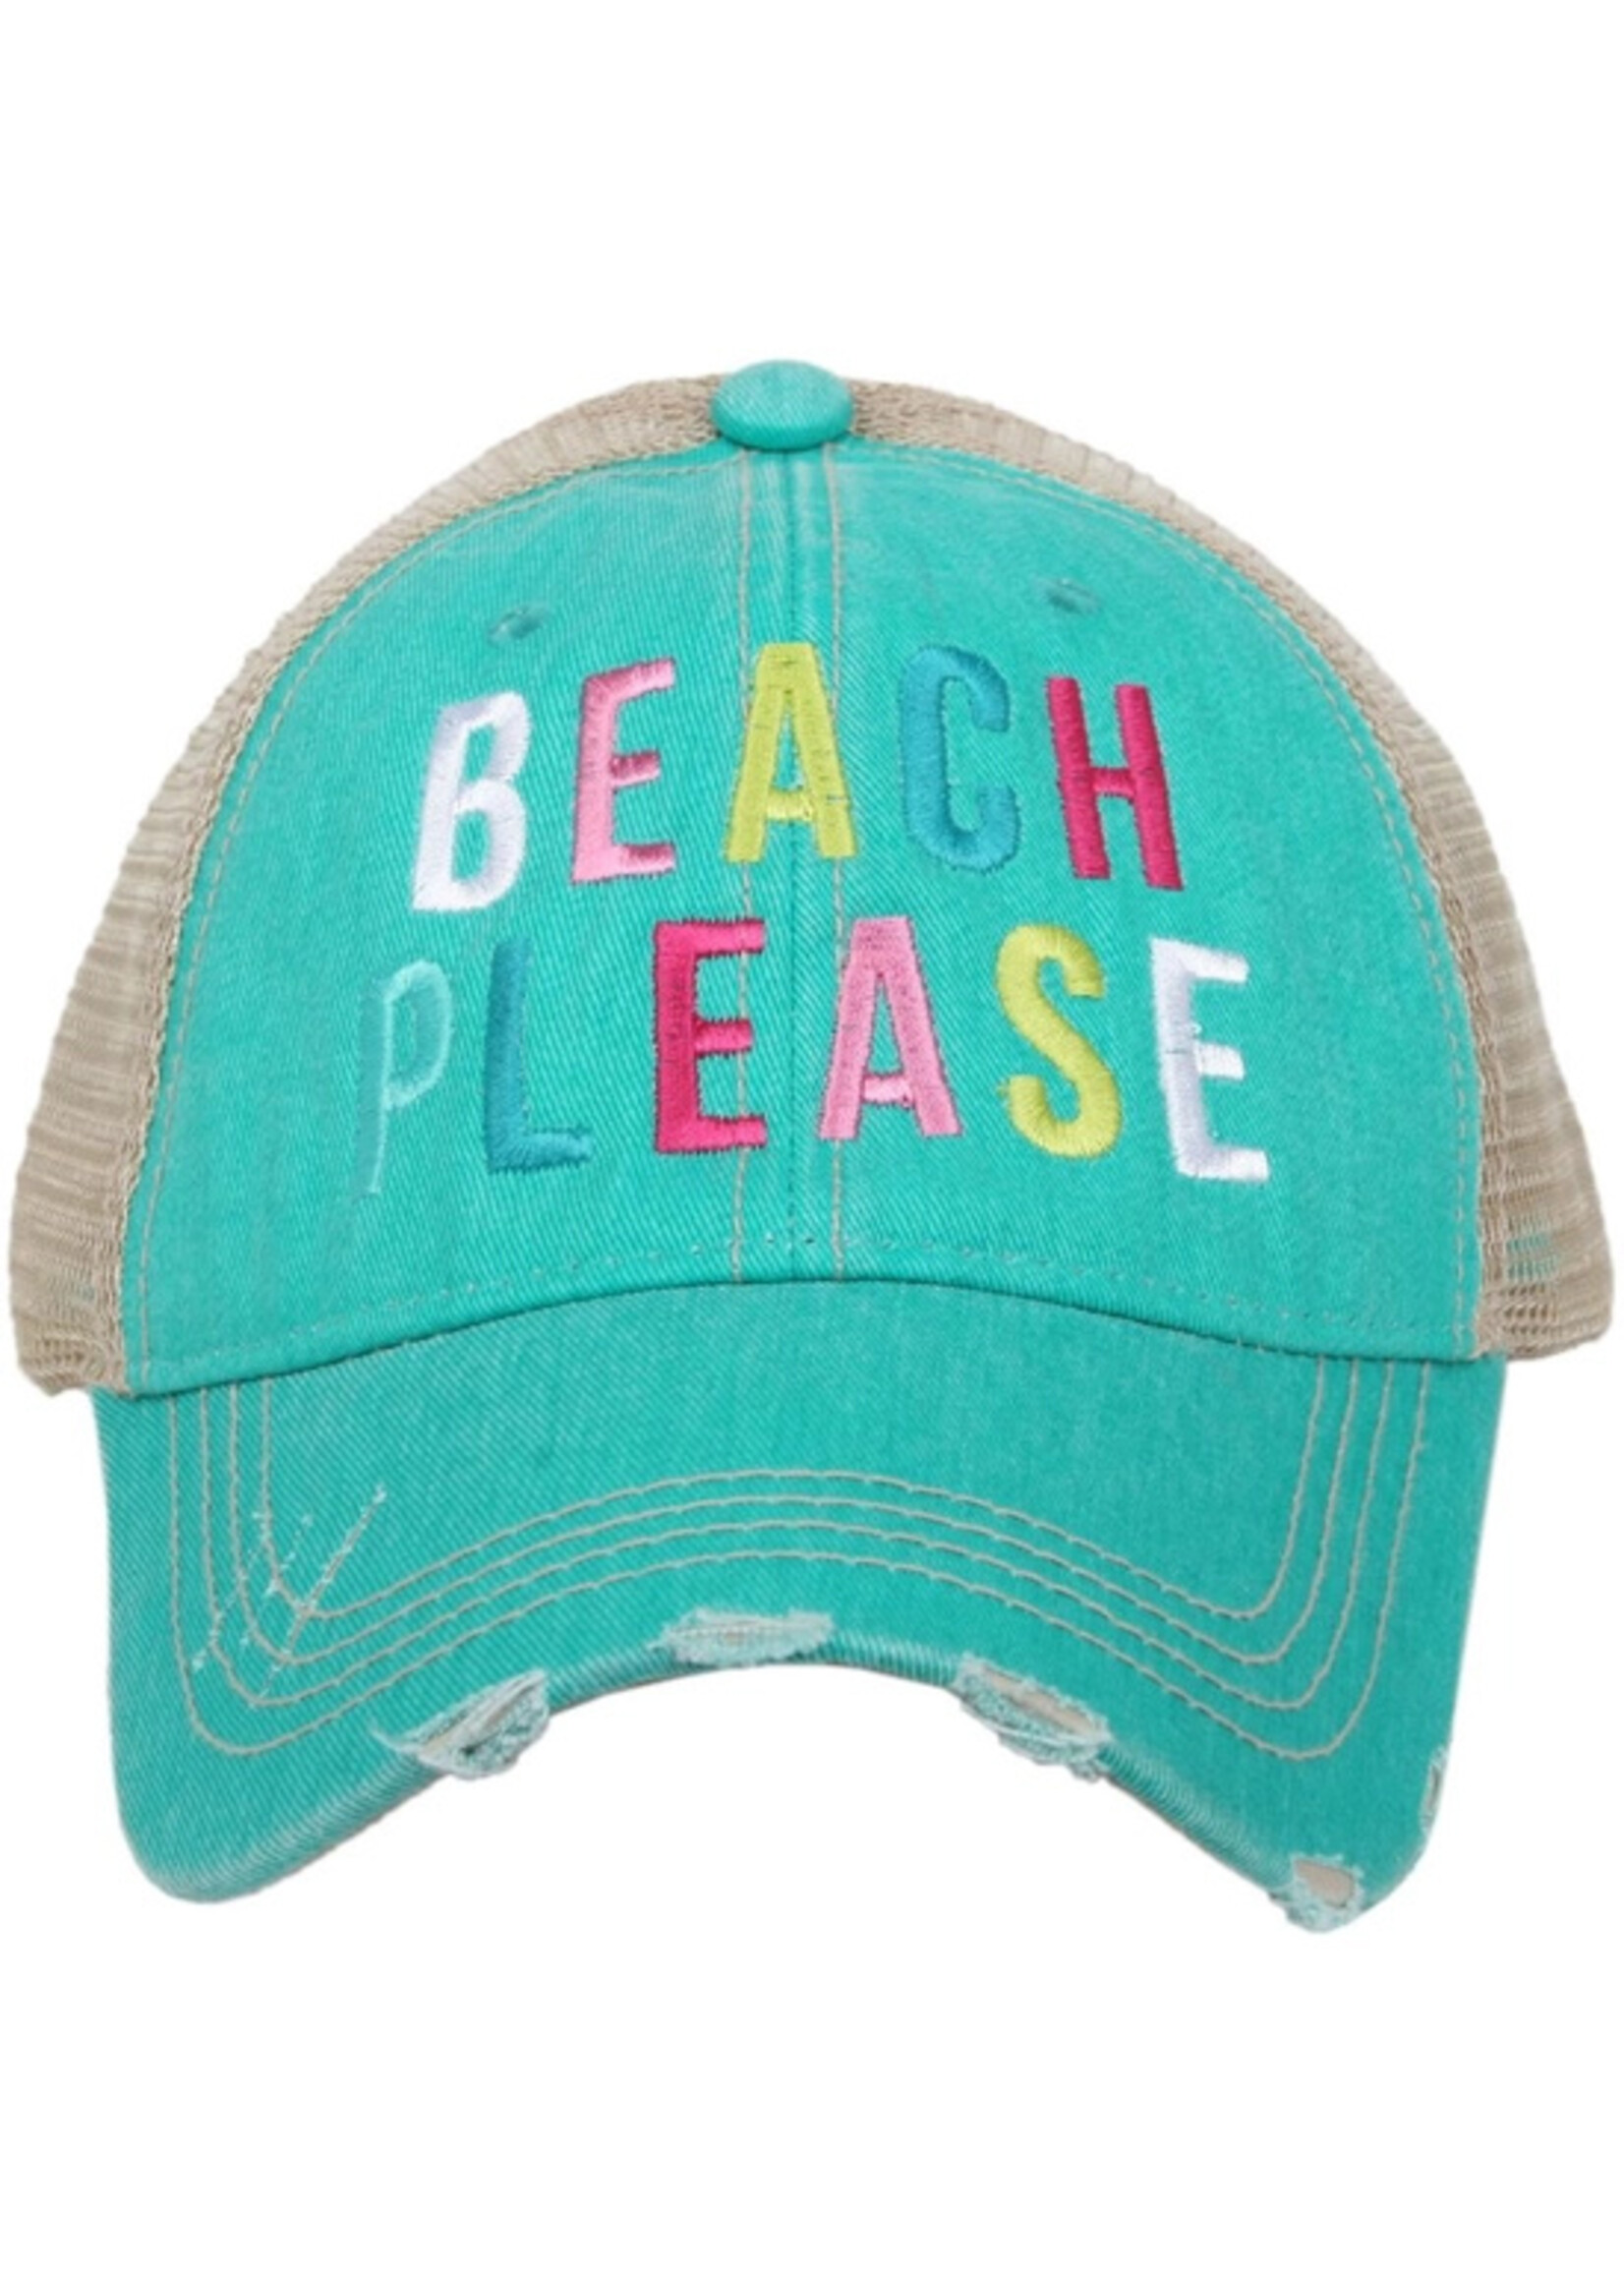 Katydid Beach Please Teal Trucker Hat